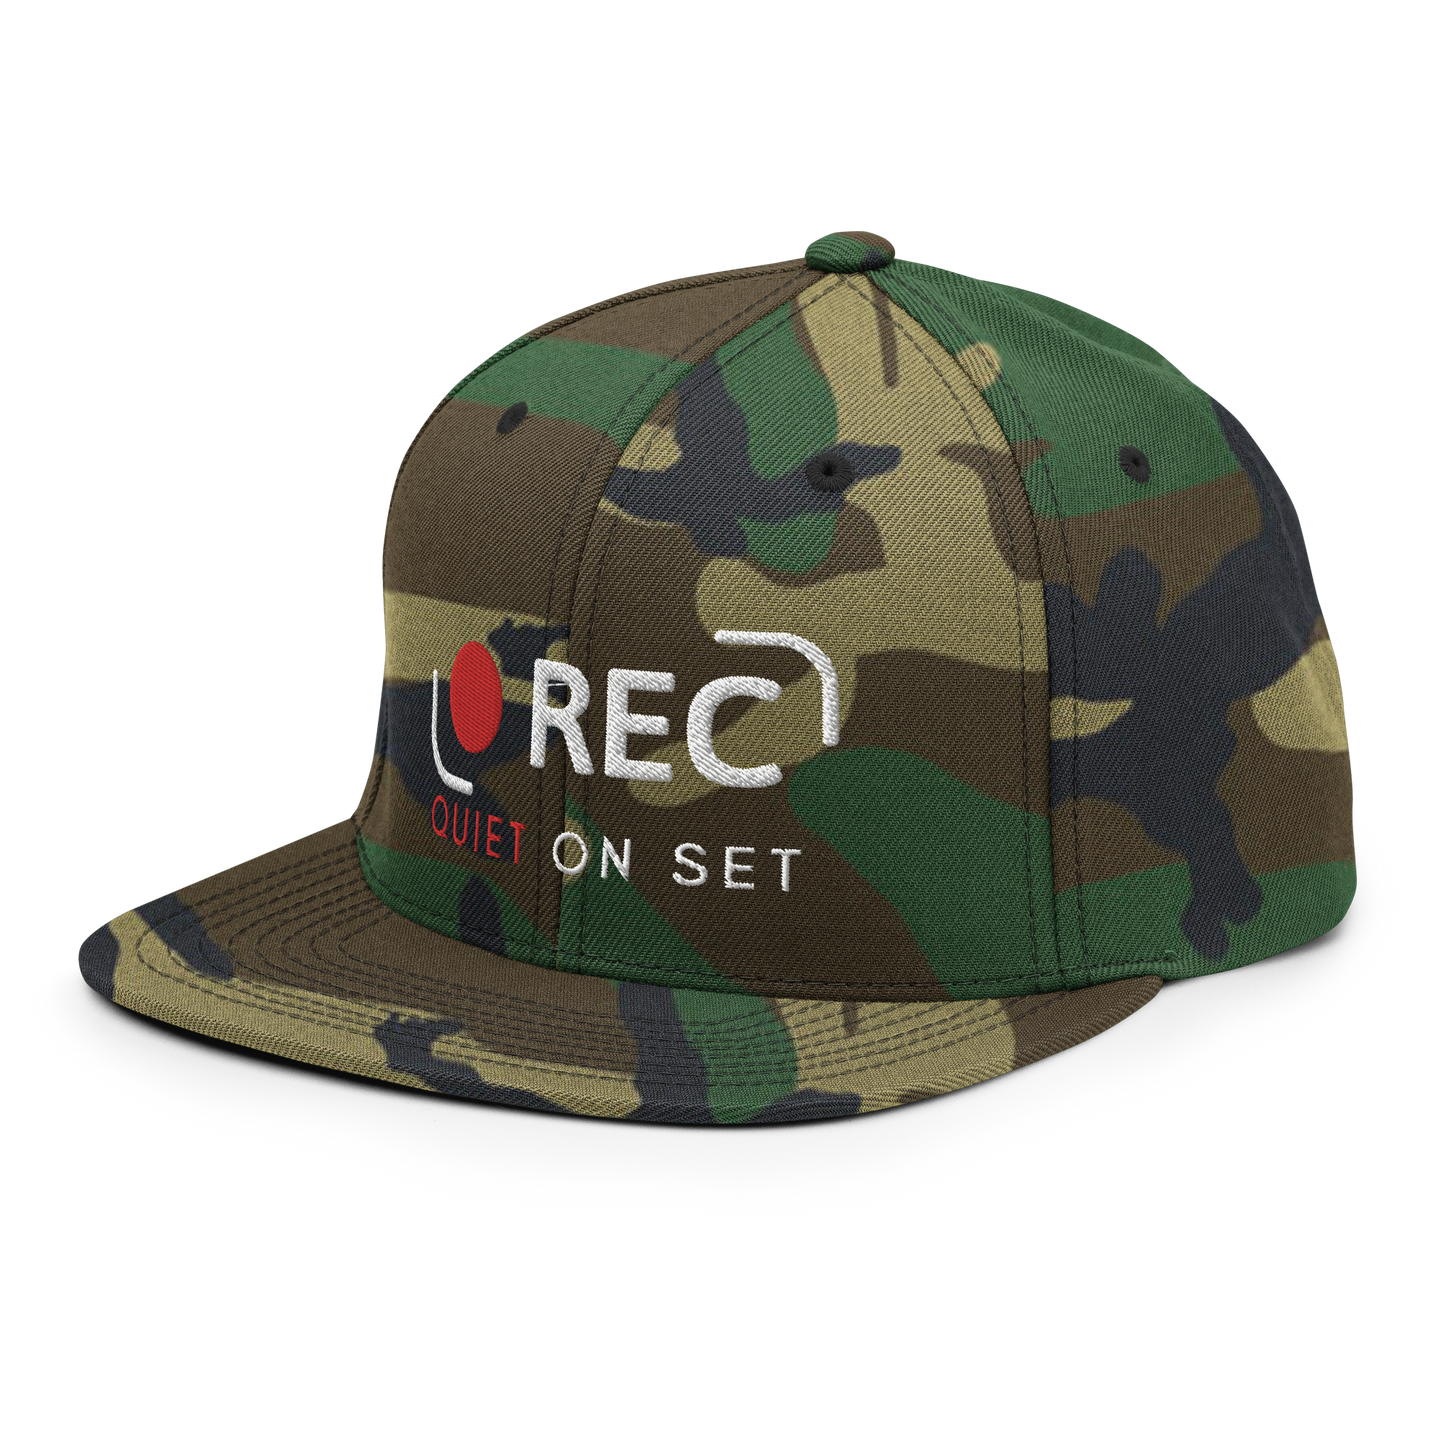 REC - Quiet On Set Snapback Hat (Variant B)